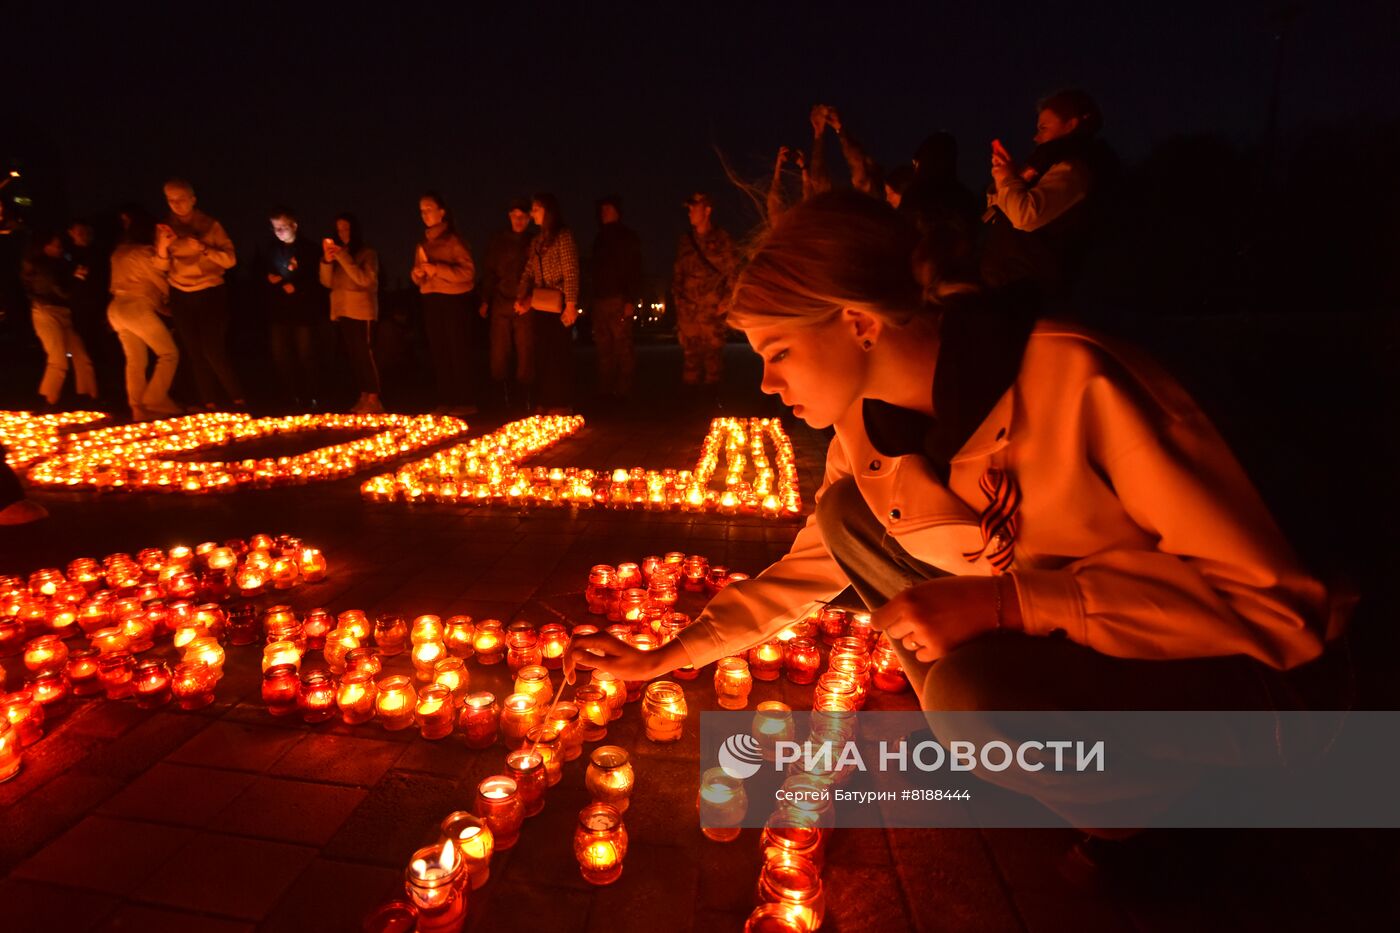 Акция "Свеча памяти" в Донецке